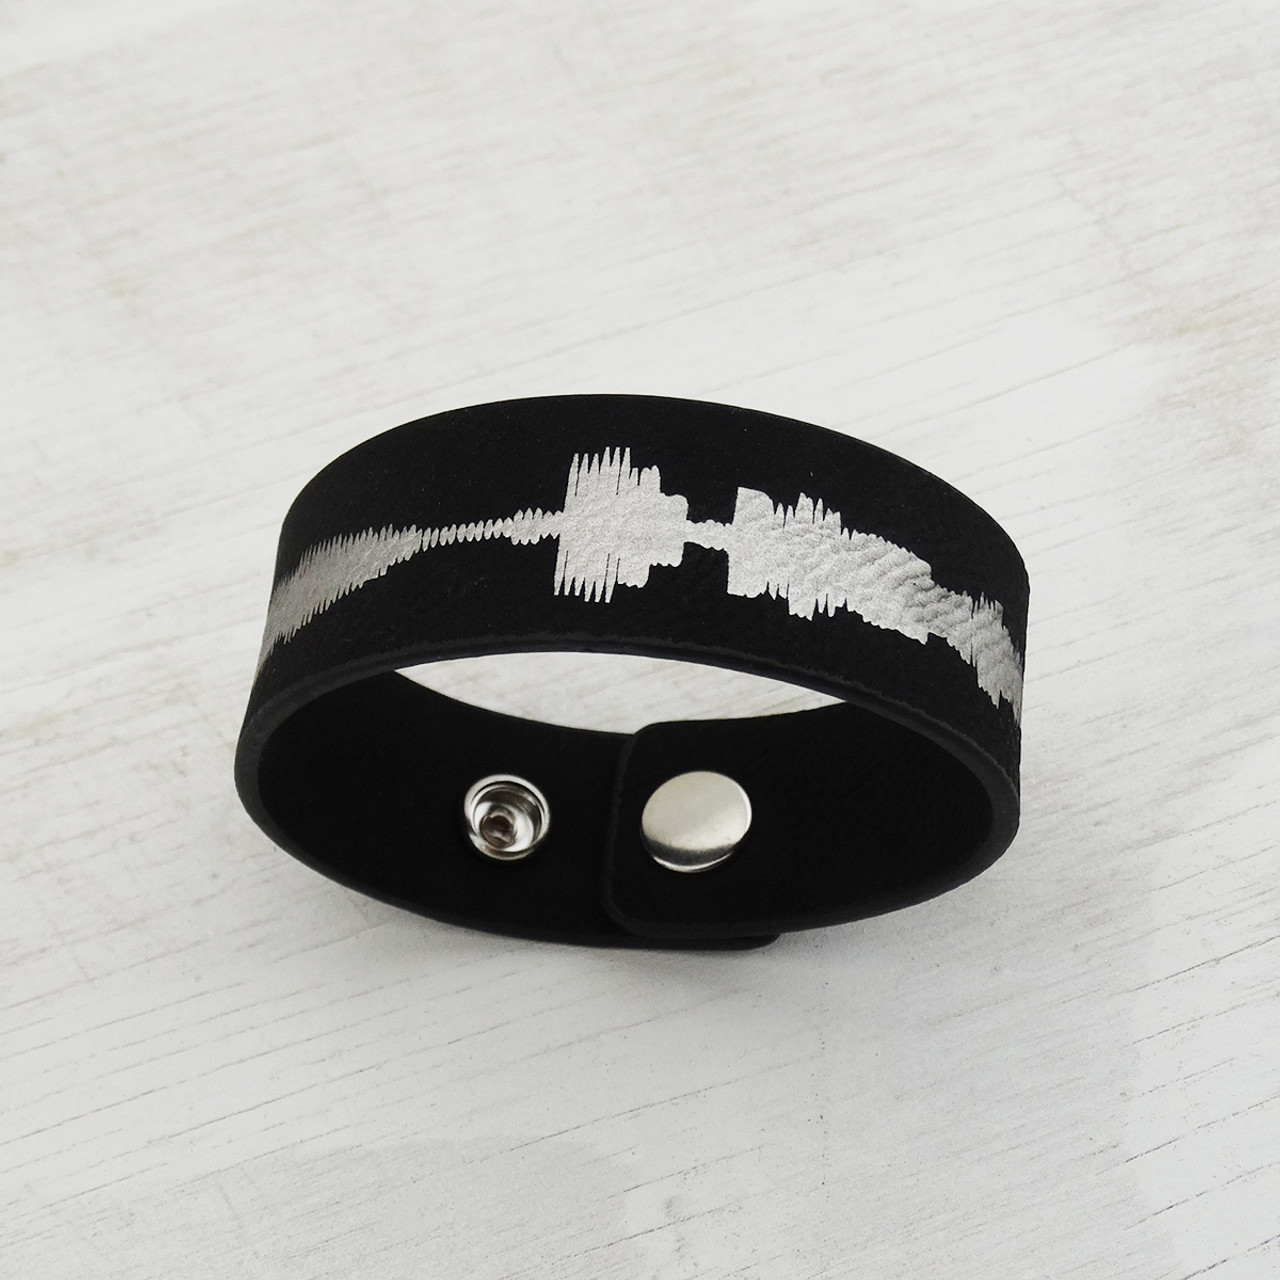 Sound Wave Bracelets, Necklaces & Rings